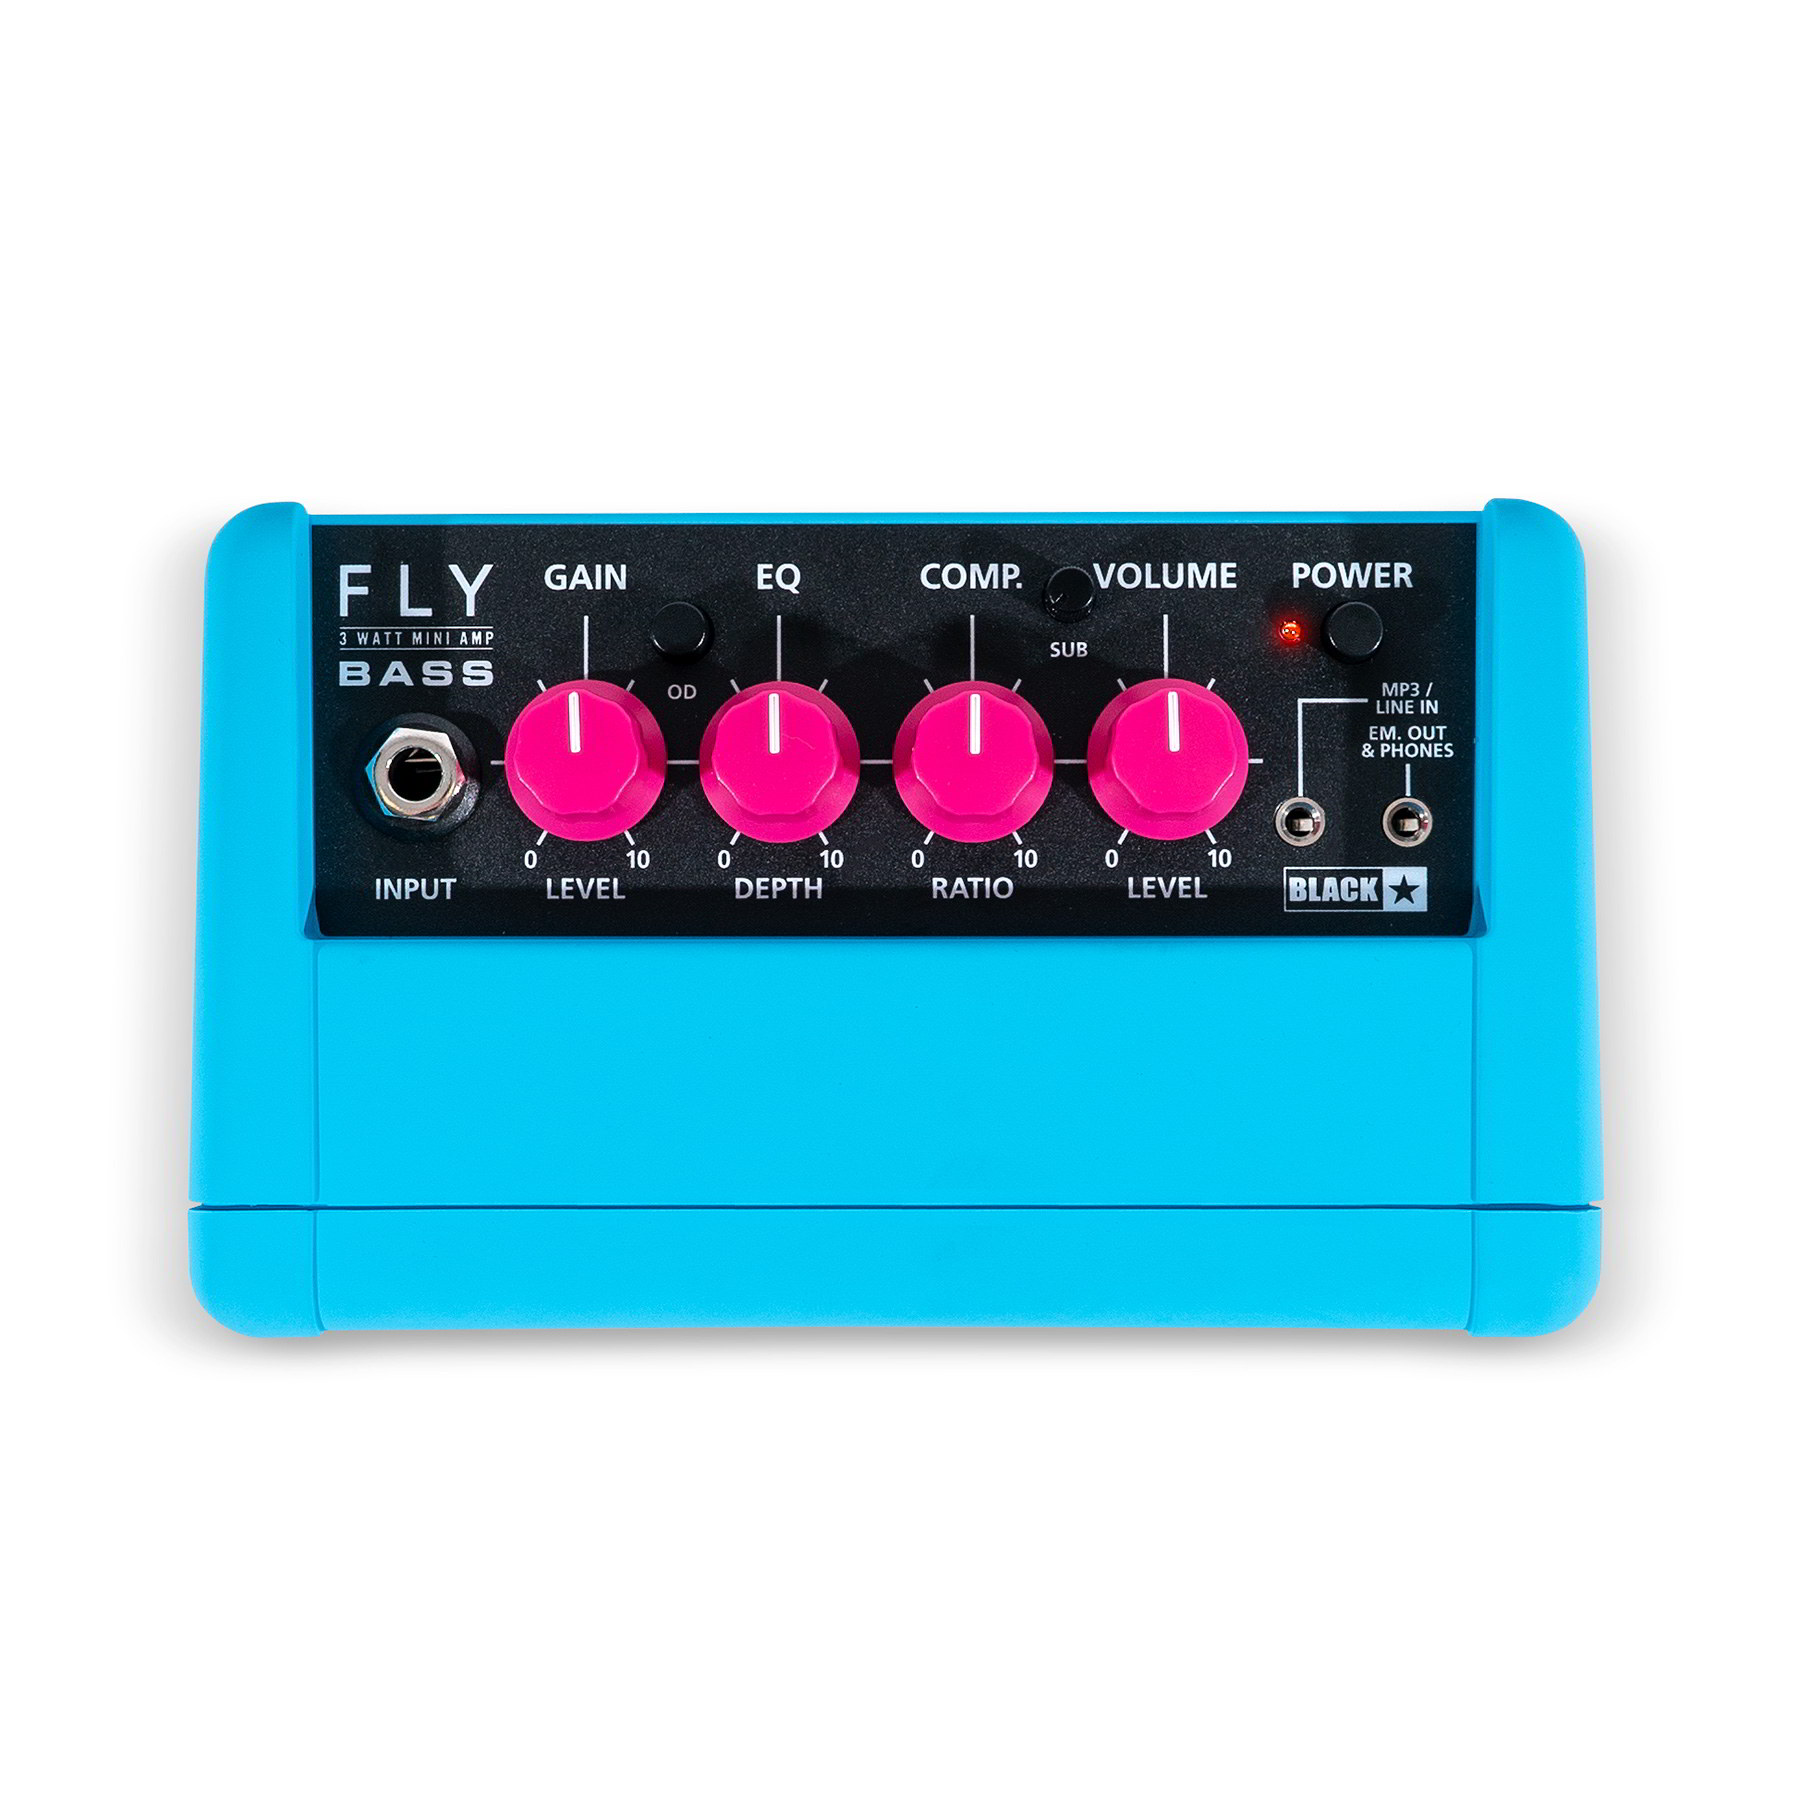 FLY 3 Bass NEON BLUEパネル画像